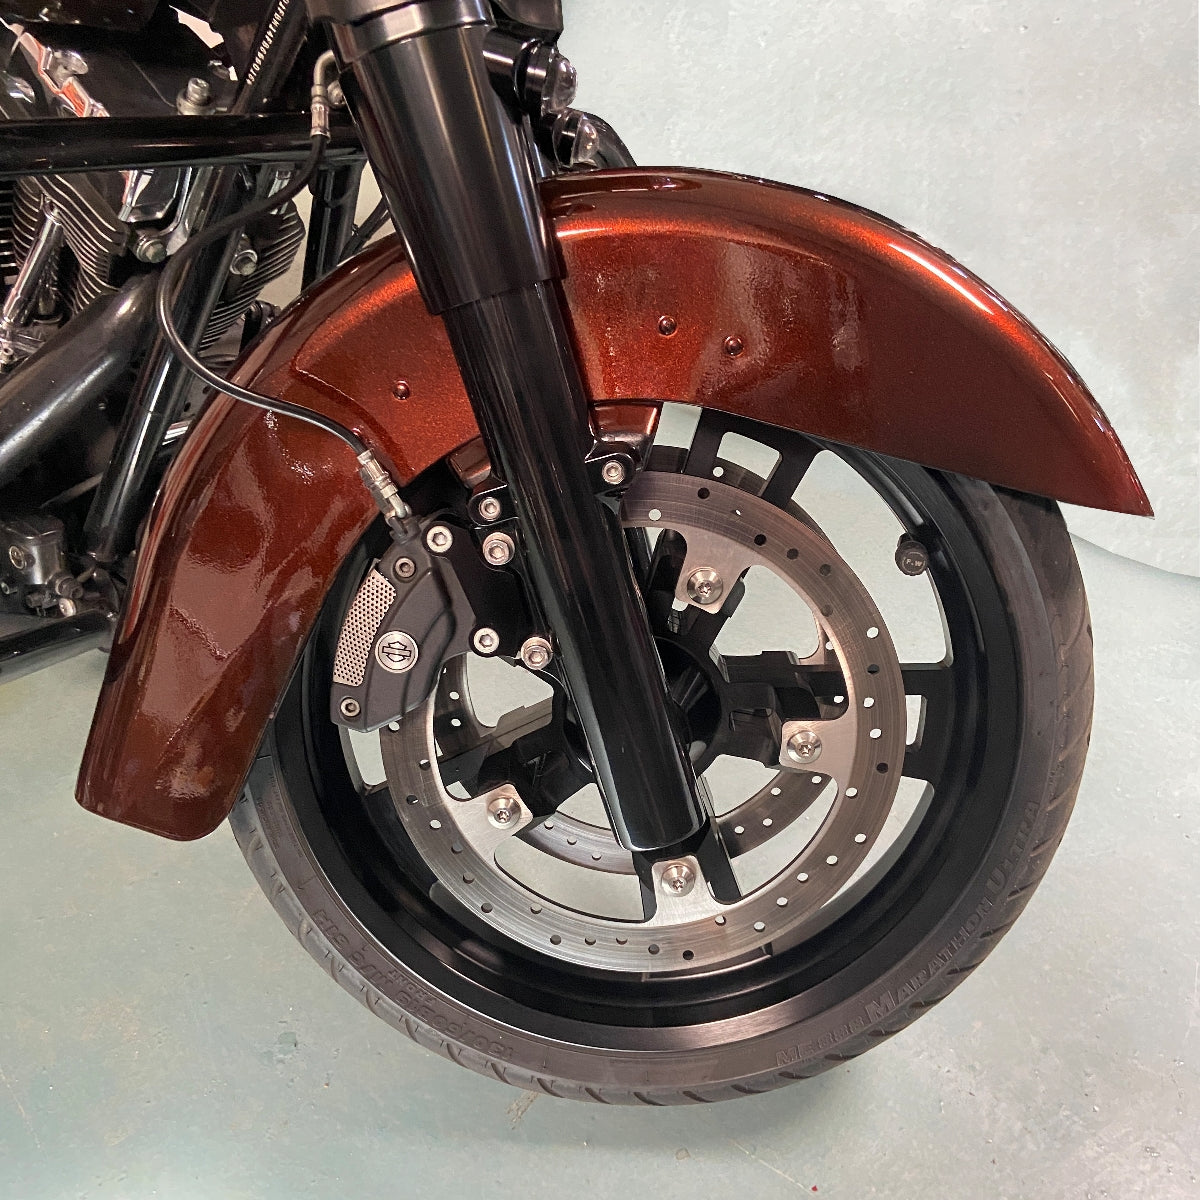 GeezerEngineering 49mm Fork Conversion Harley Touring 2014 & later Fender (Cow-Bells)